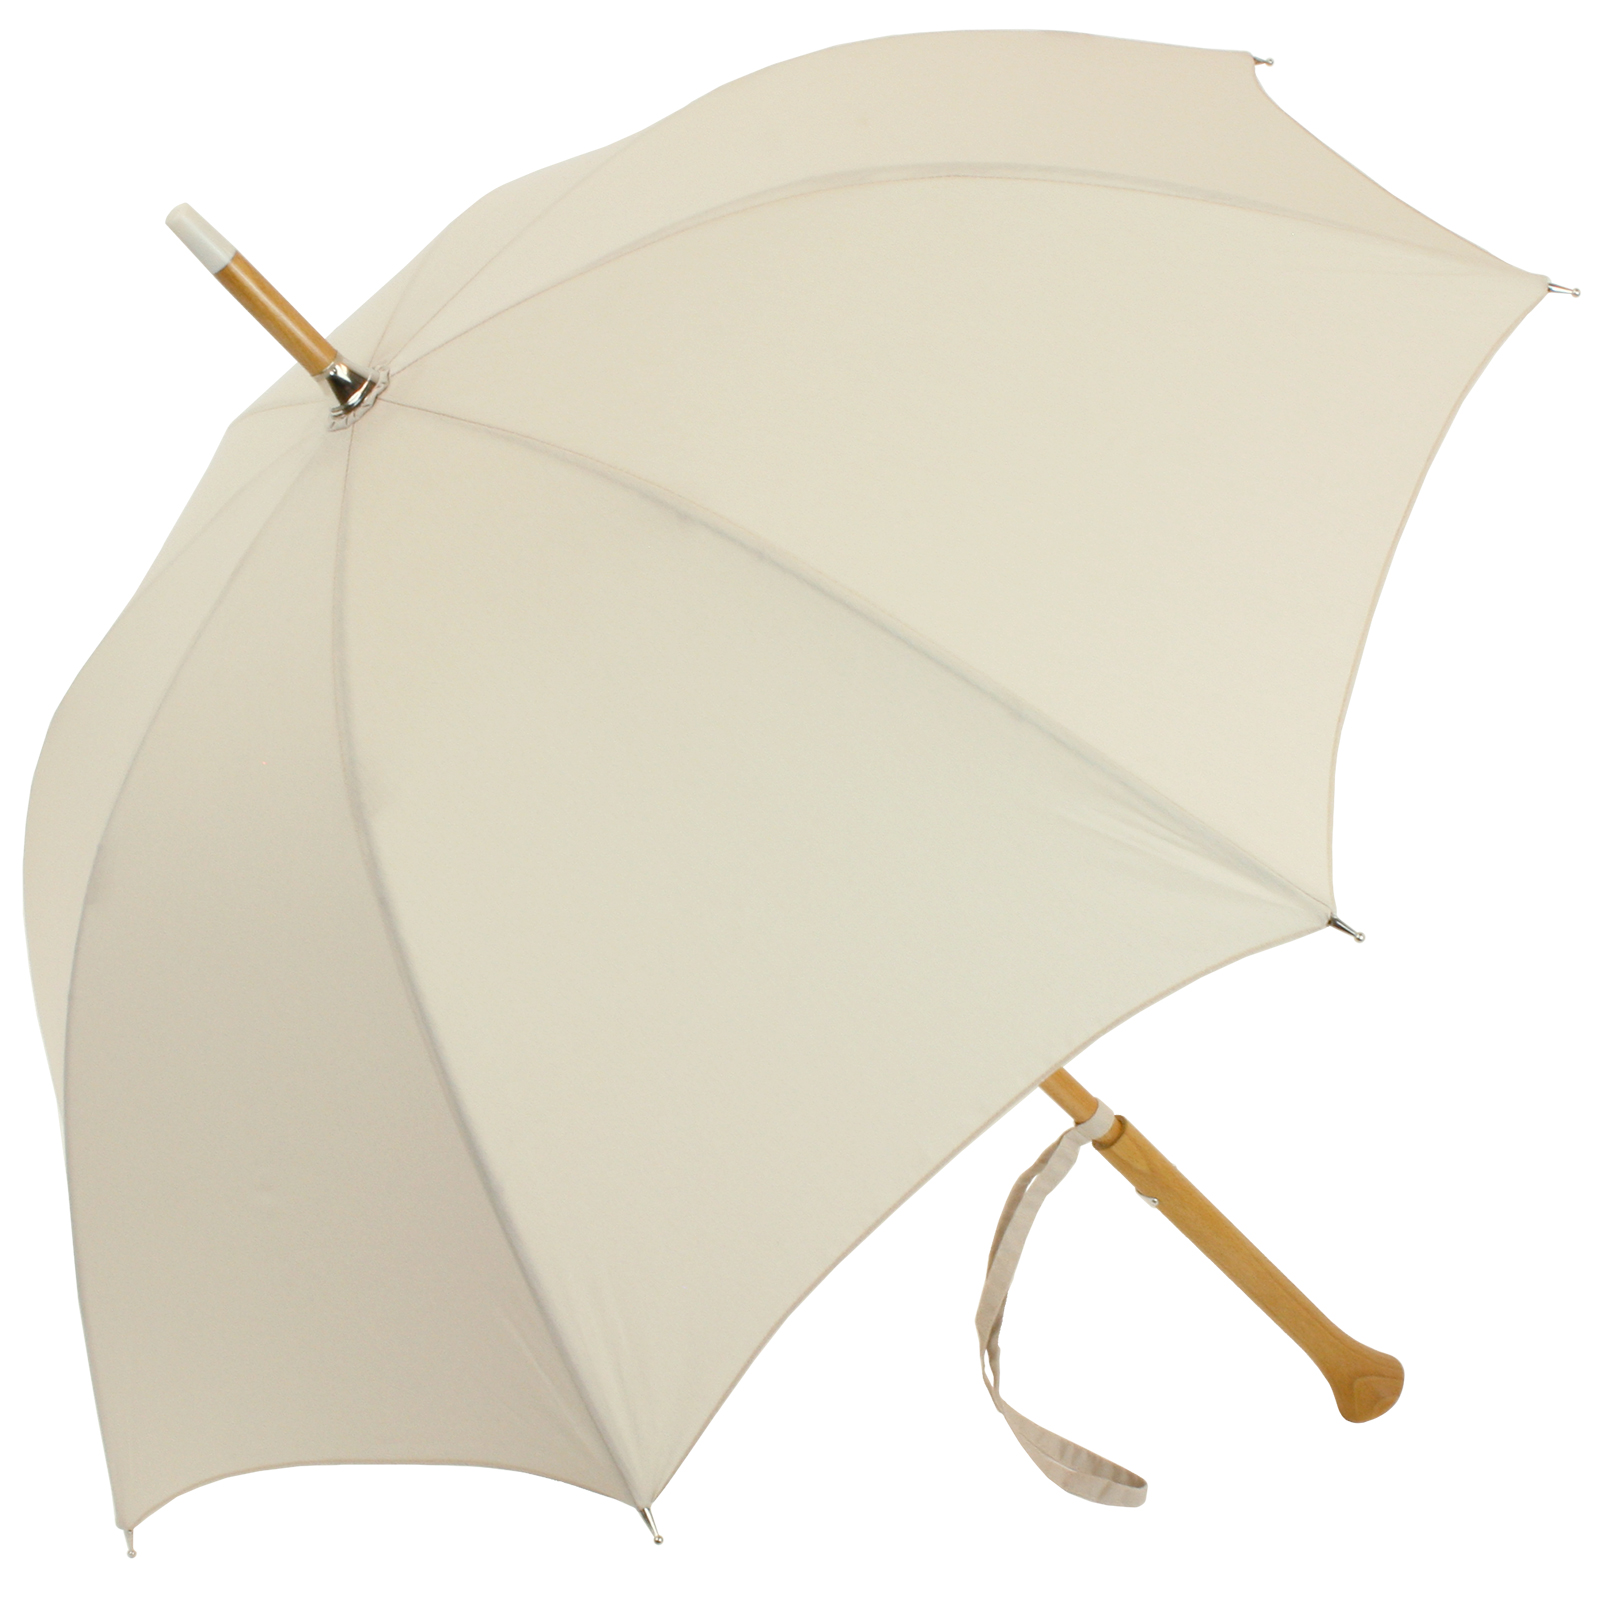 Elise - Ivory UVP Sun Umbrella by Pierre Vaux